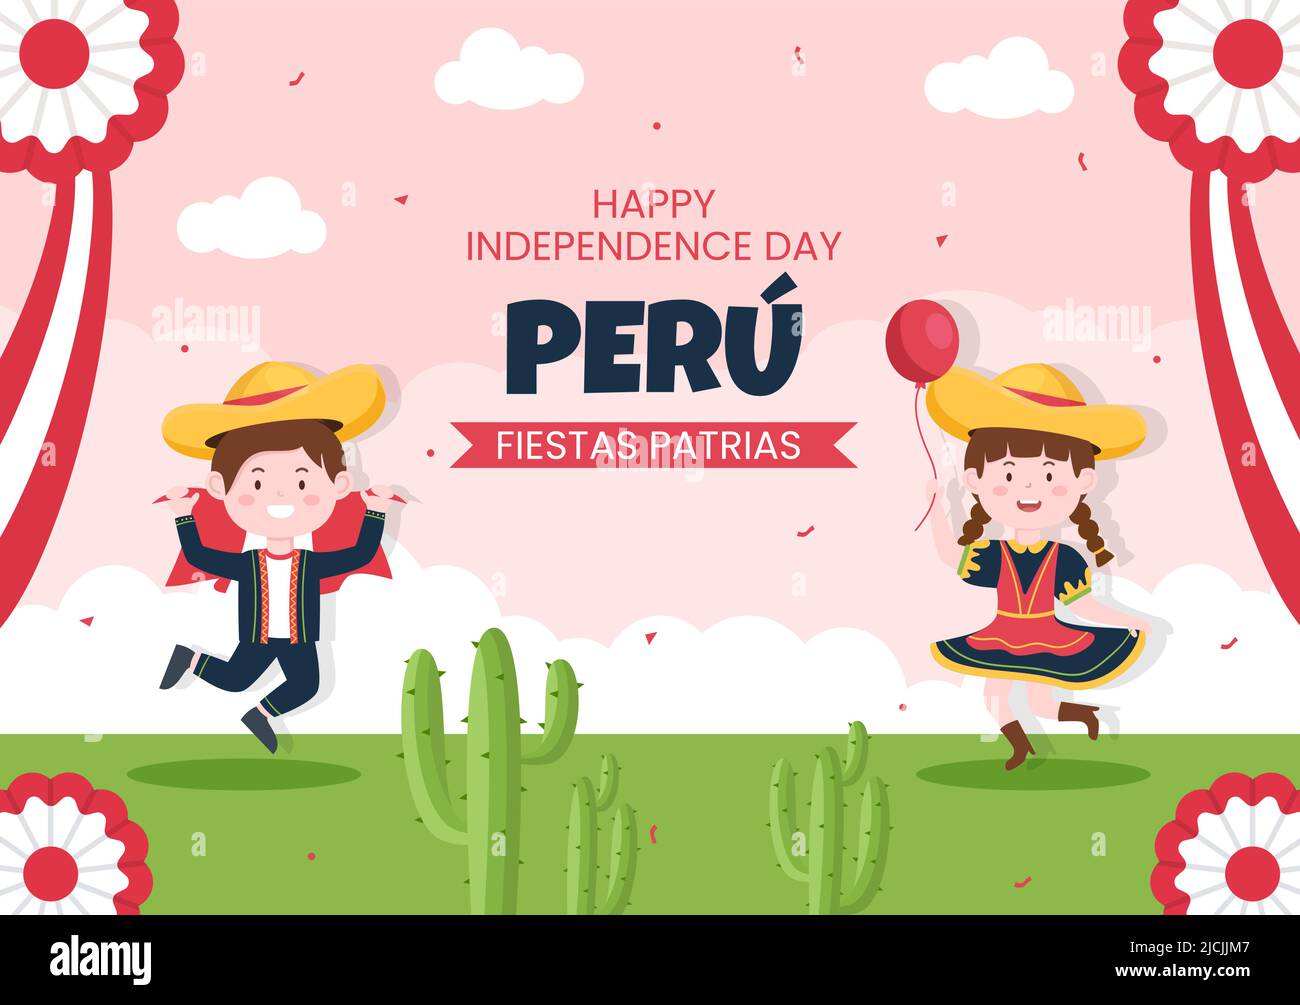 Fiestas Patrias Peru Post Template Social Media Flat Cartoon Background Vector Illustration Stock Vector